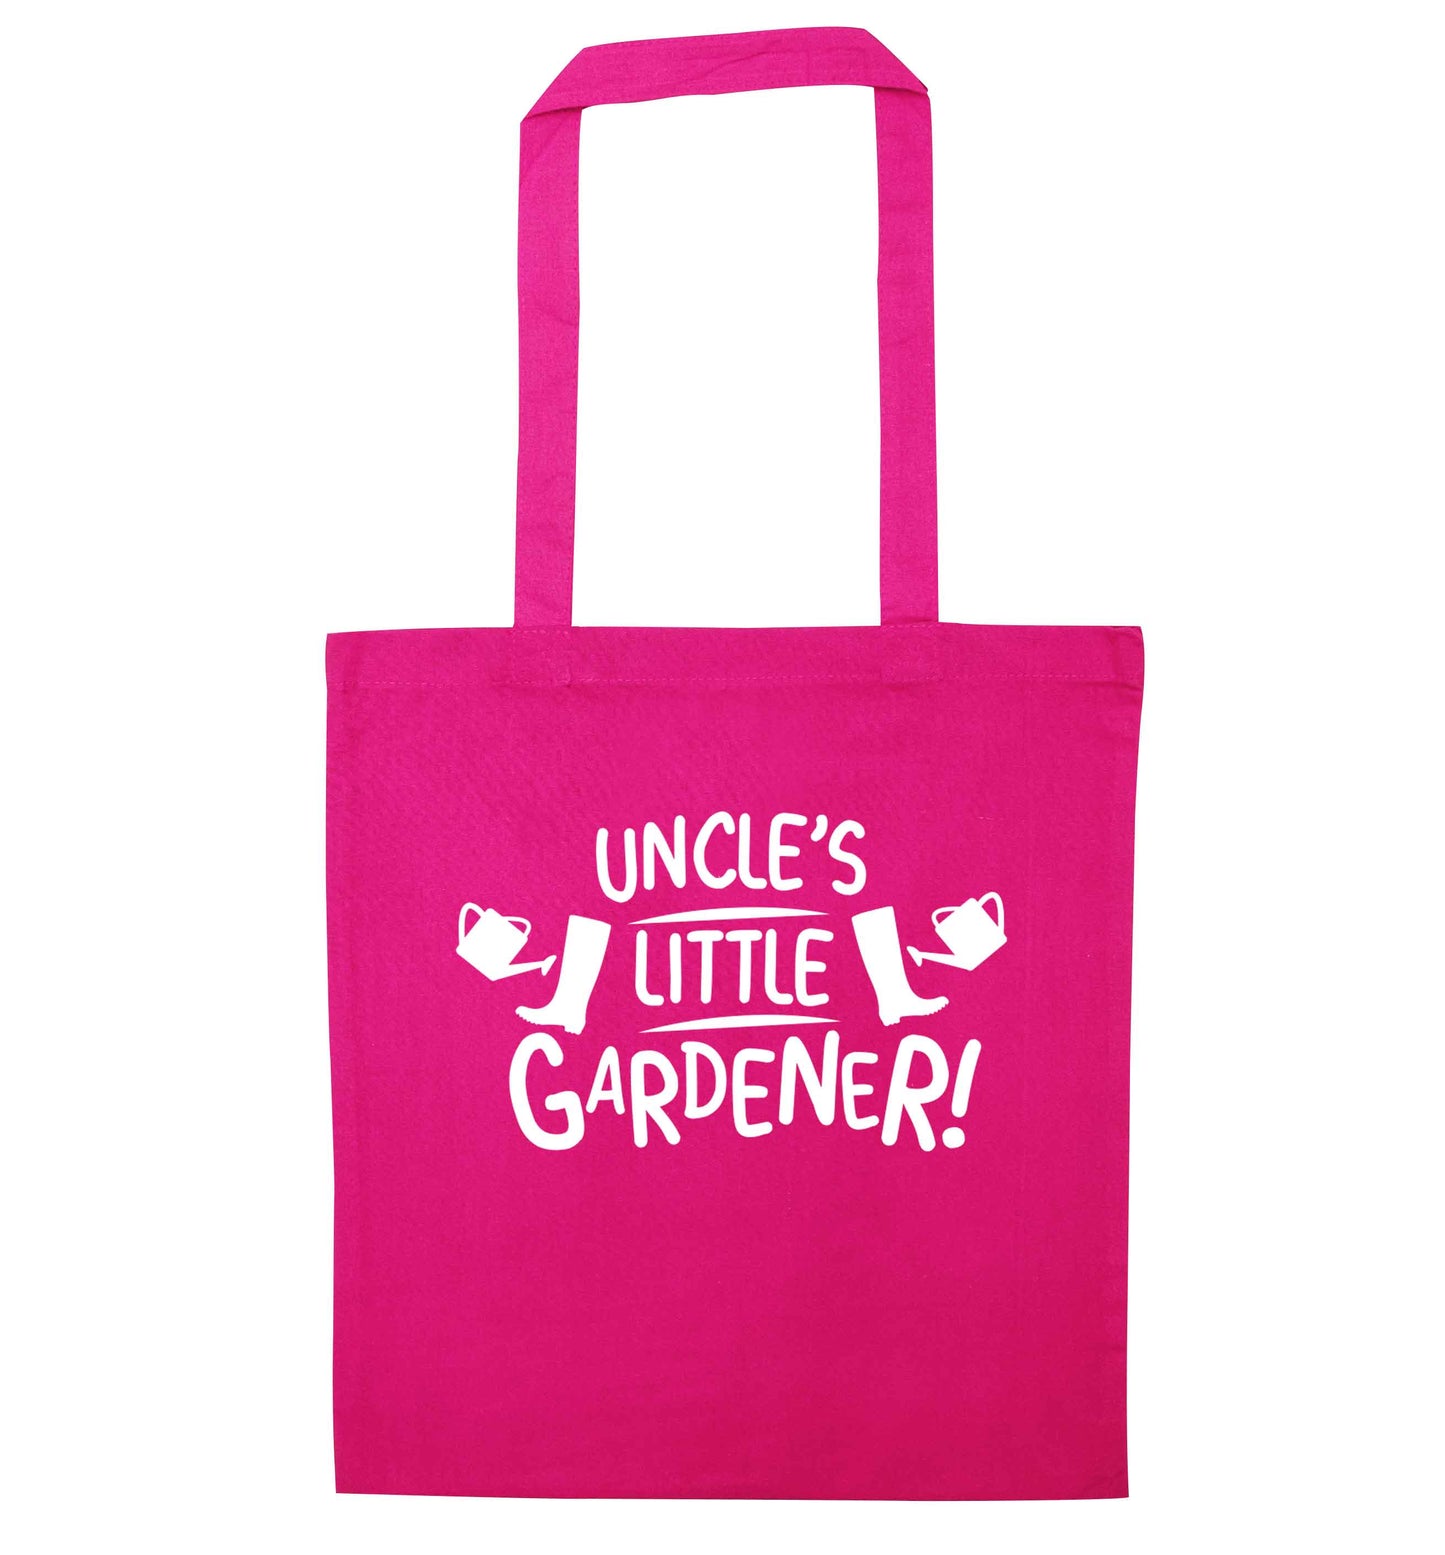 Uncle's little gardener pink tote bag